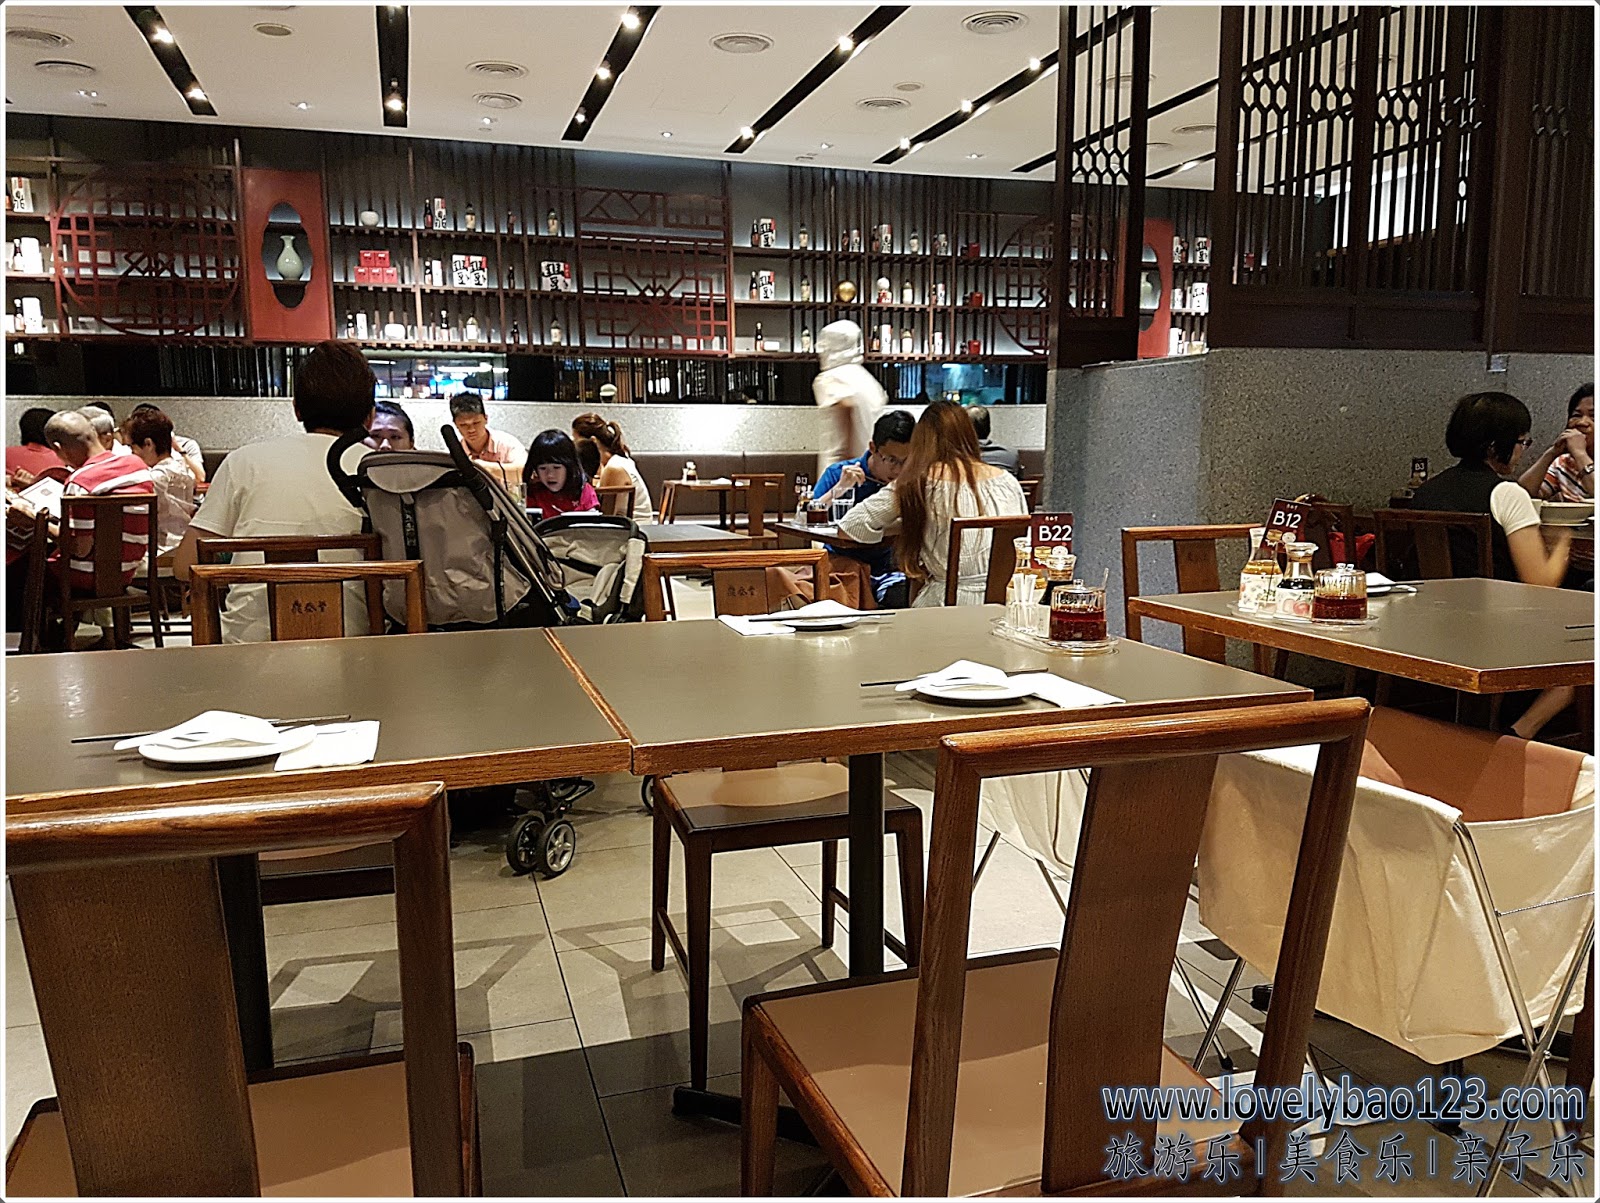 2023Din tai Fung美食餐厅,这家鼎泰丰分店位于裕廊东的J...【去哪儿攻略】